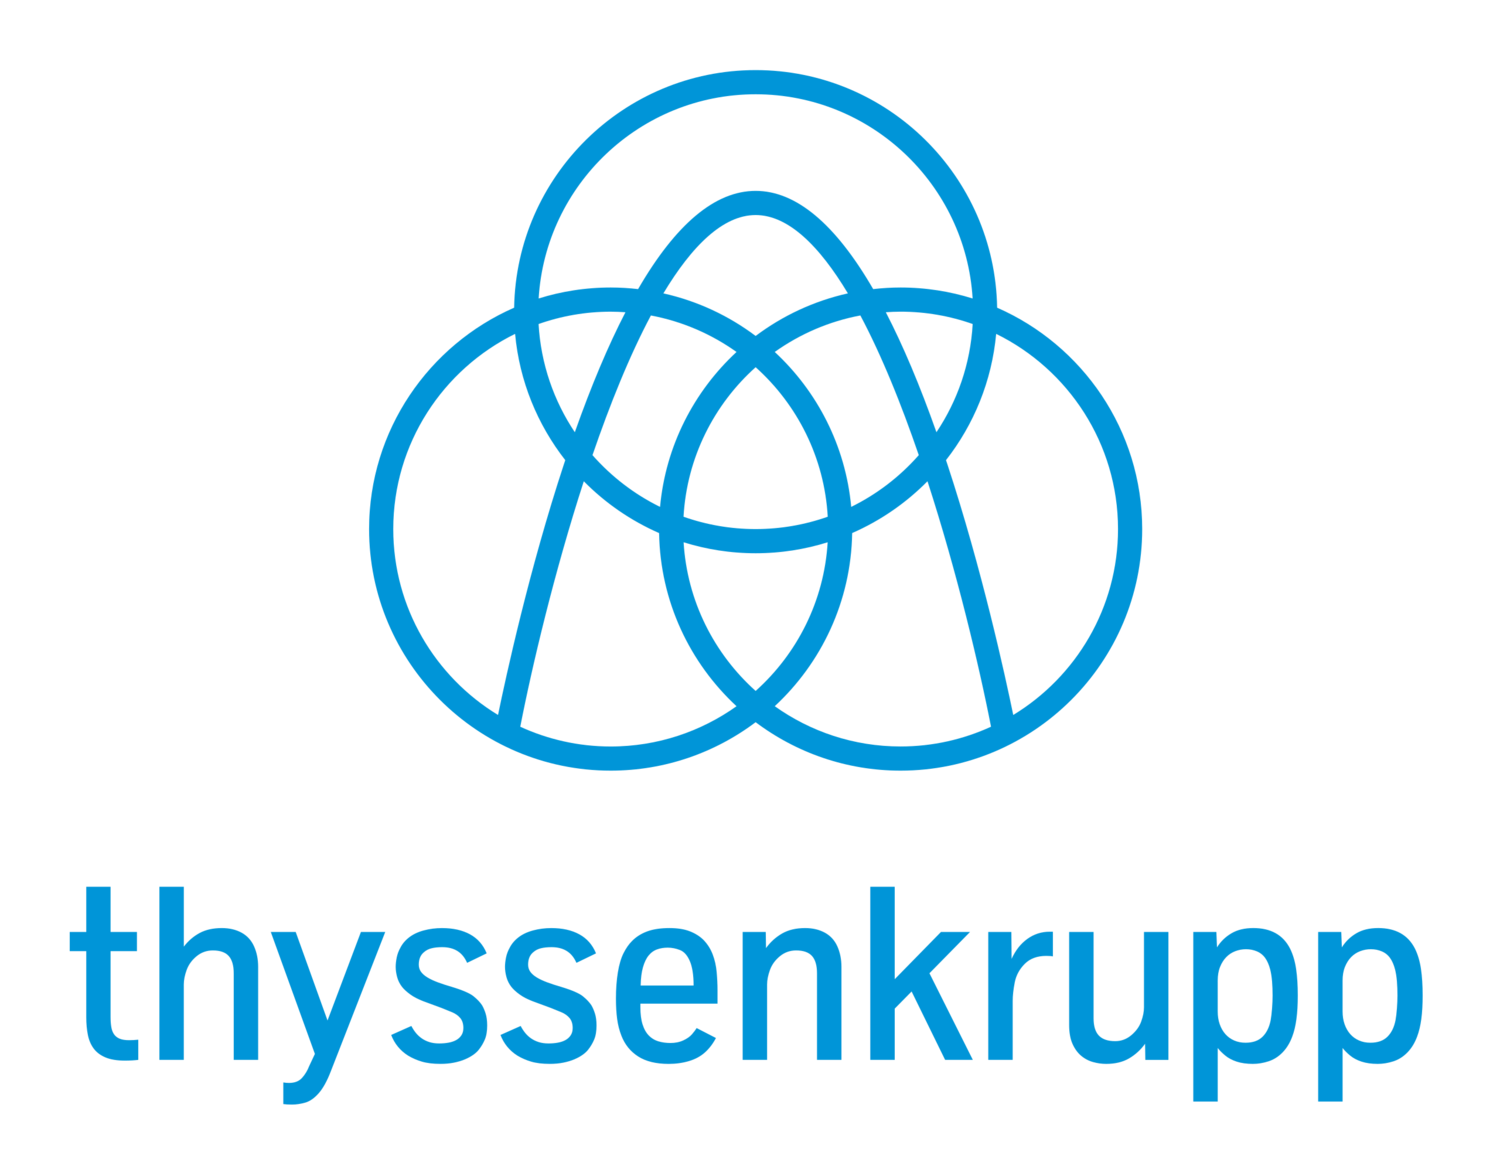 Профнастил Thyssen krupp (Німеччина)